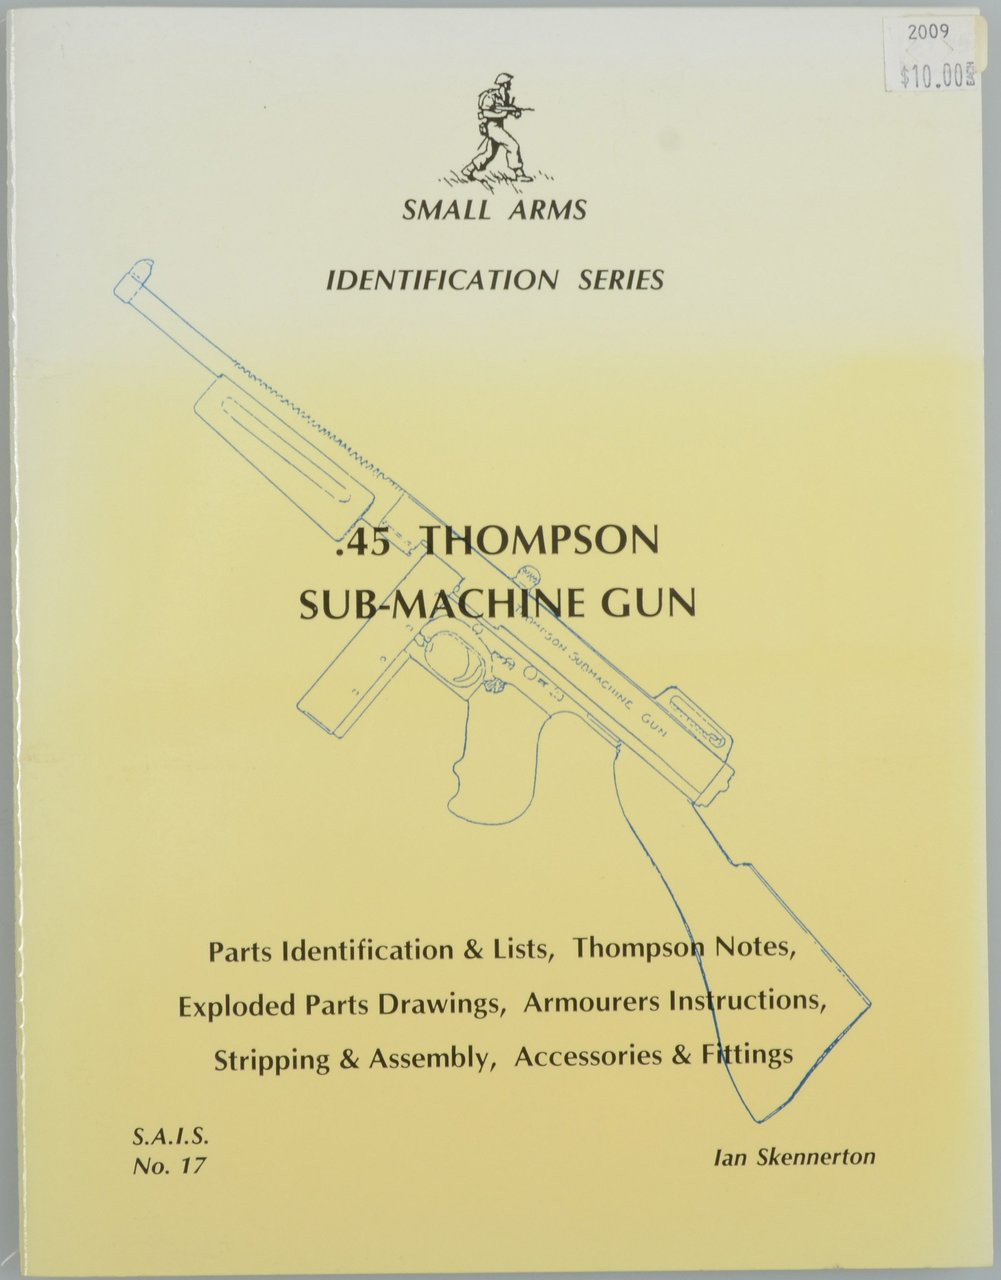 .45 THOMPSON SUB-MACHINE GUN